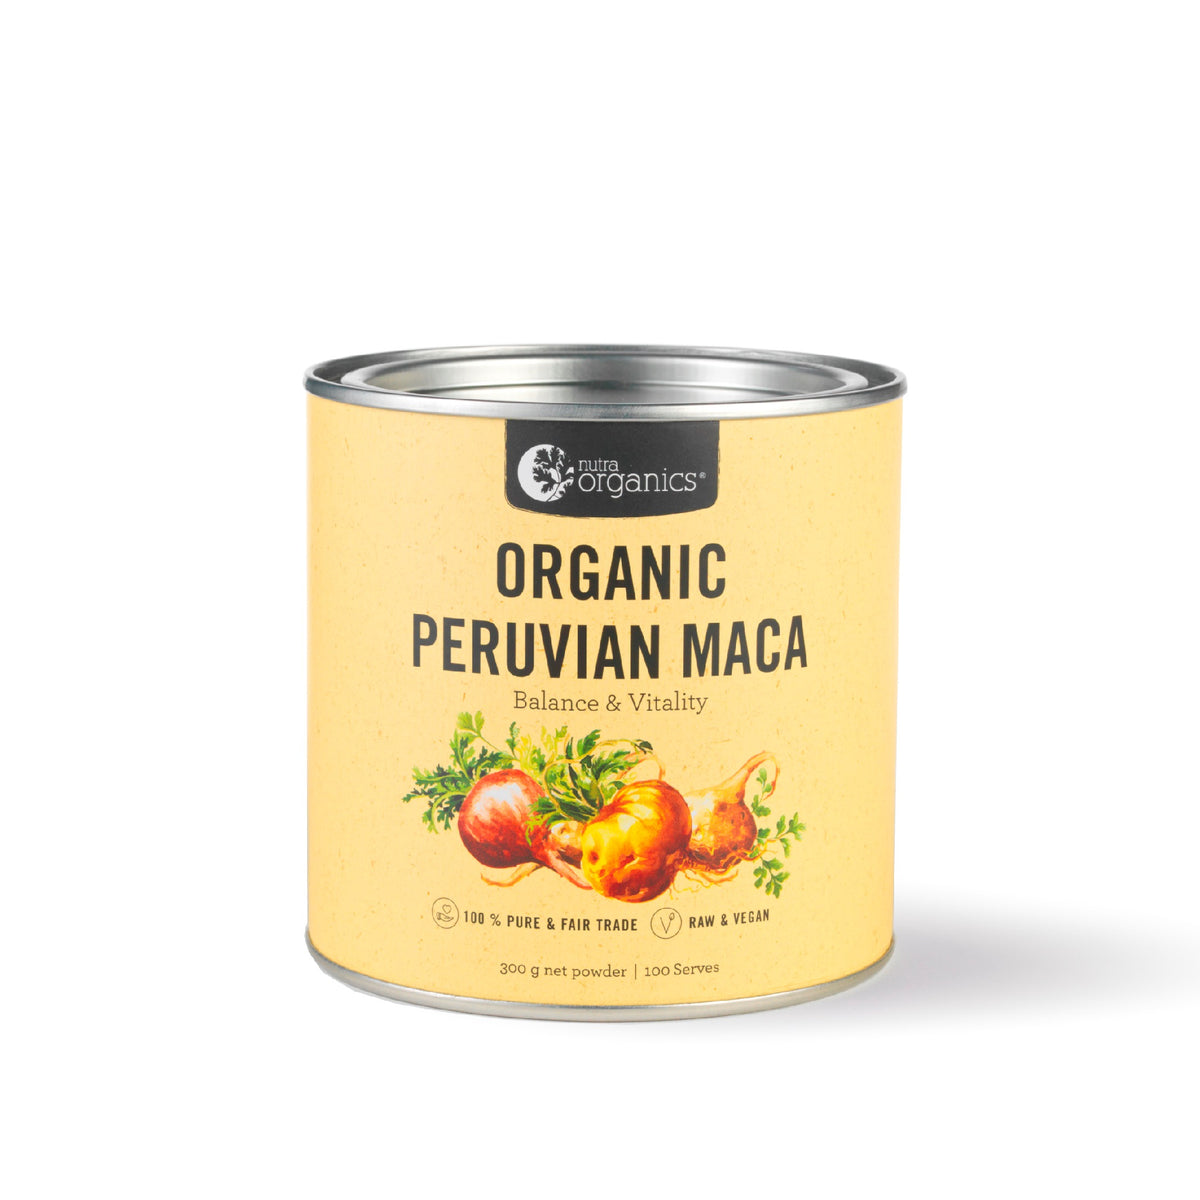 Organic Peruvian Maca Powder